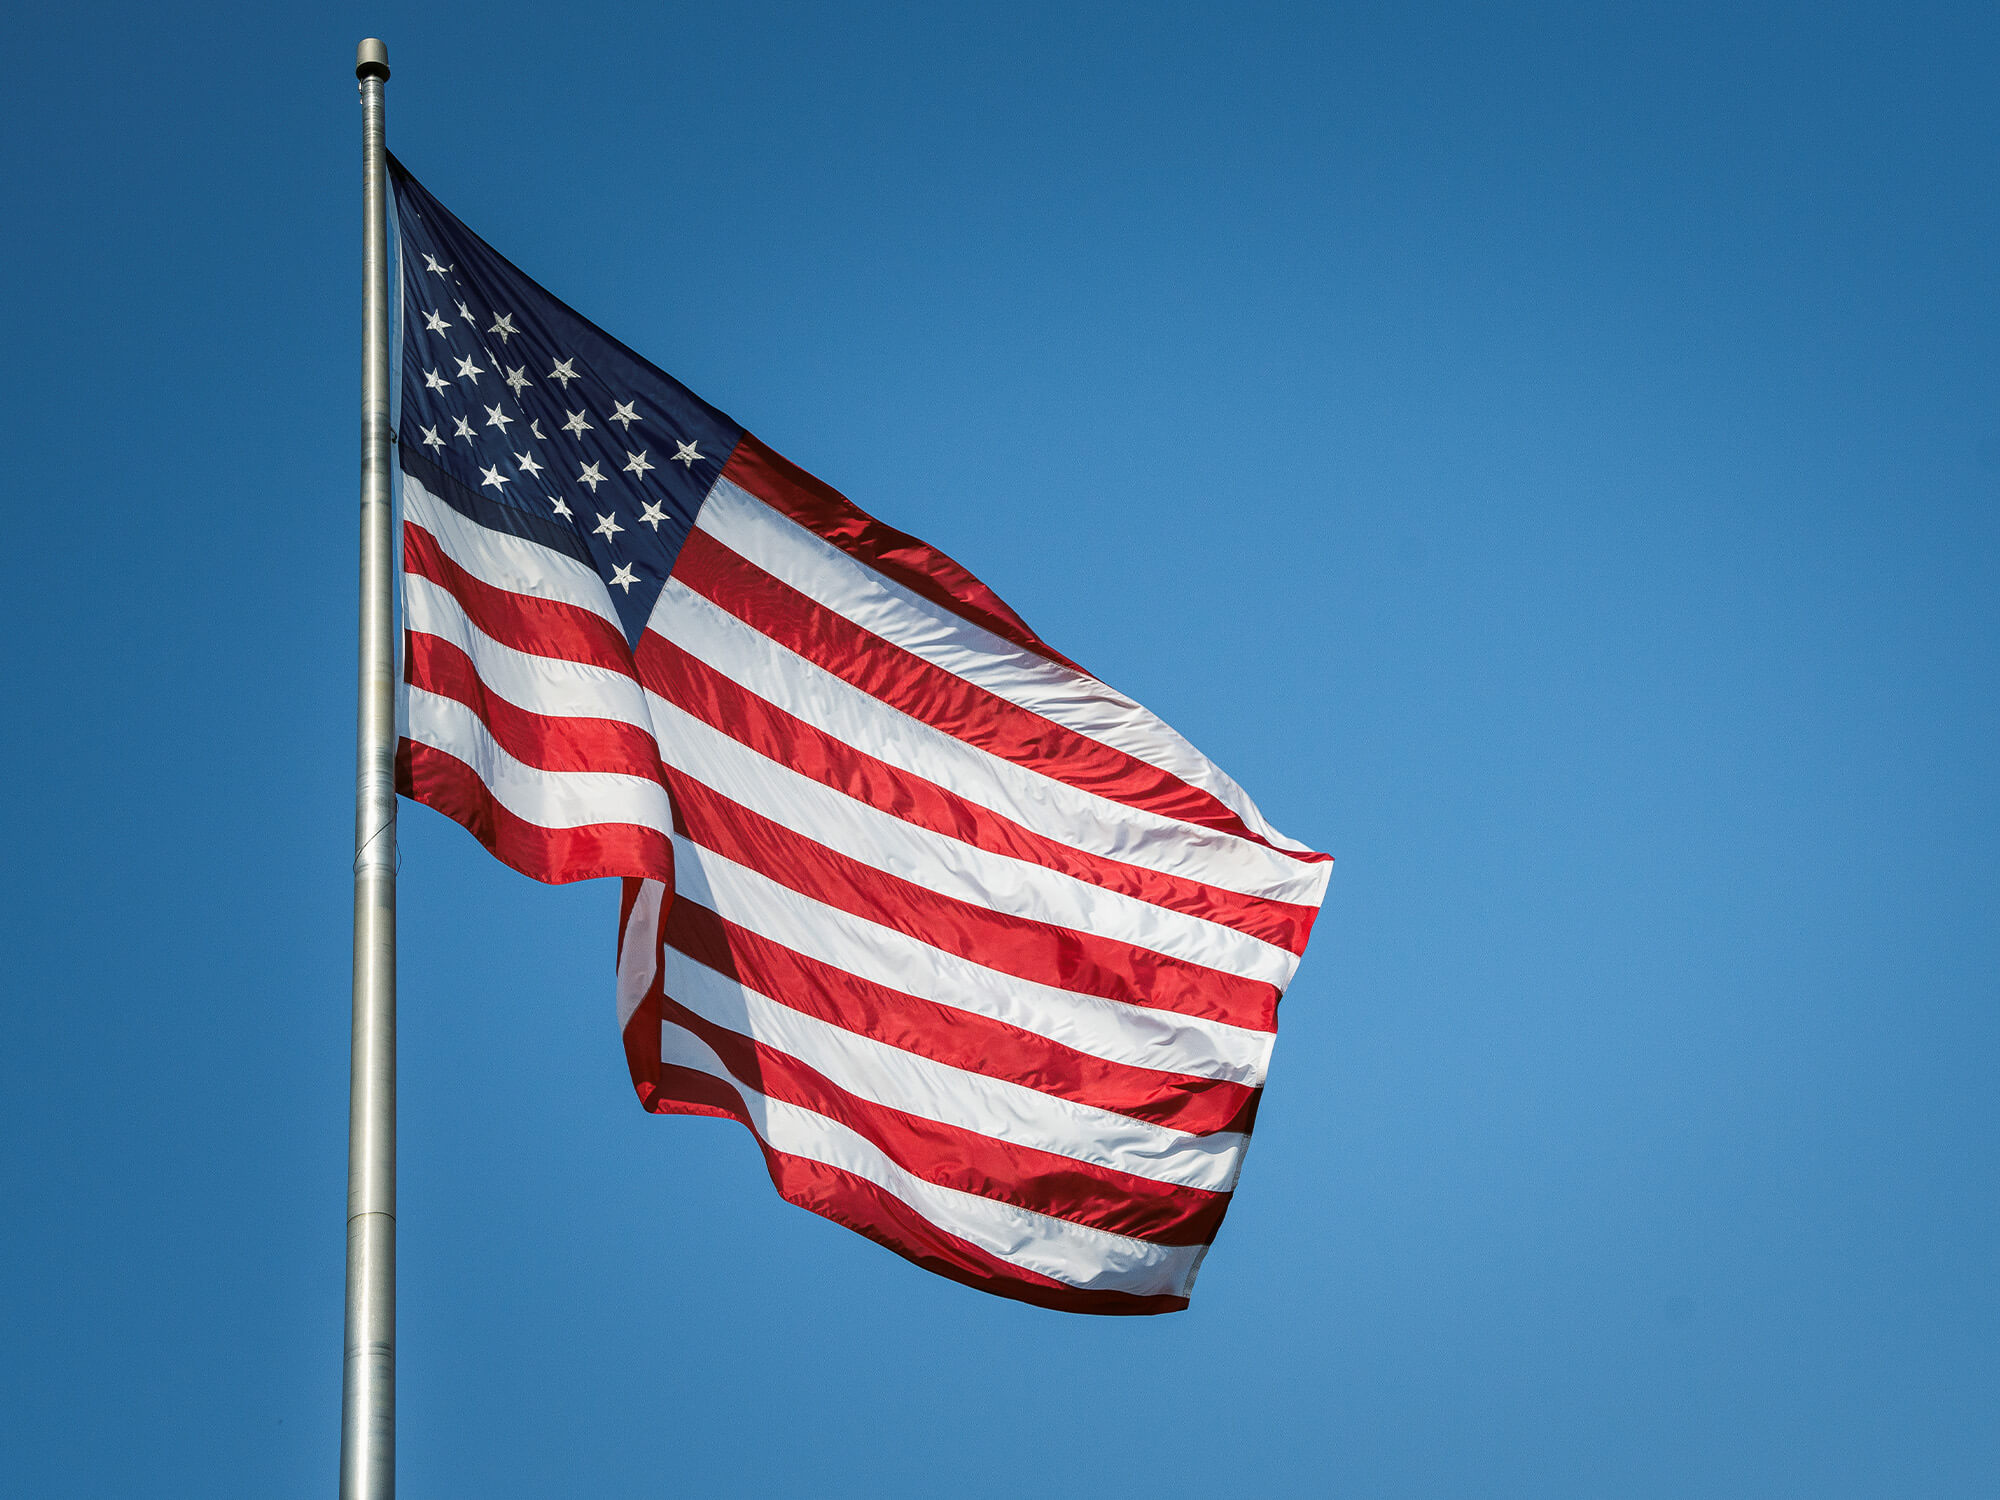 American flag on a flag pole among a blue sky